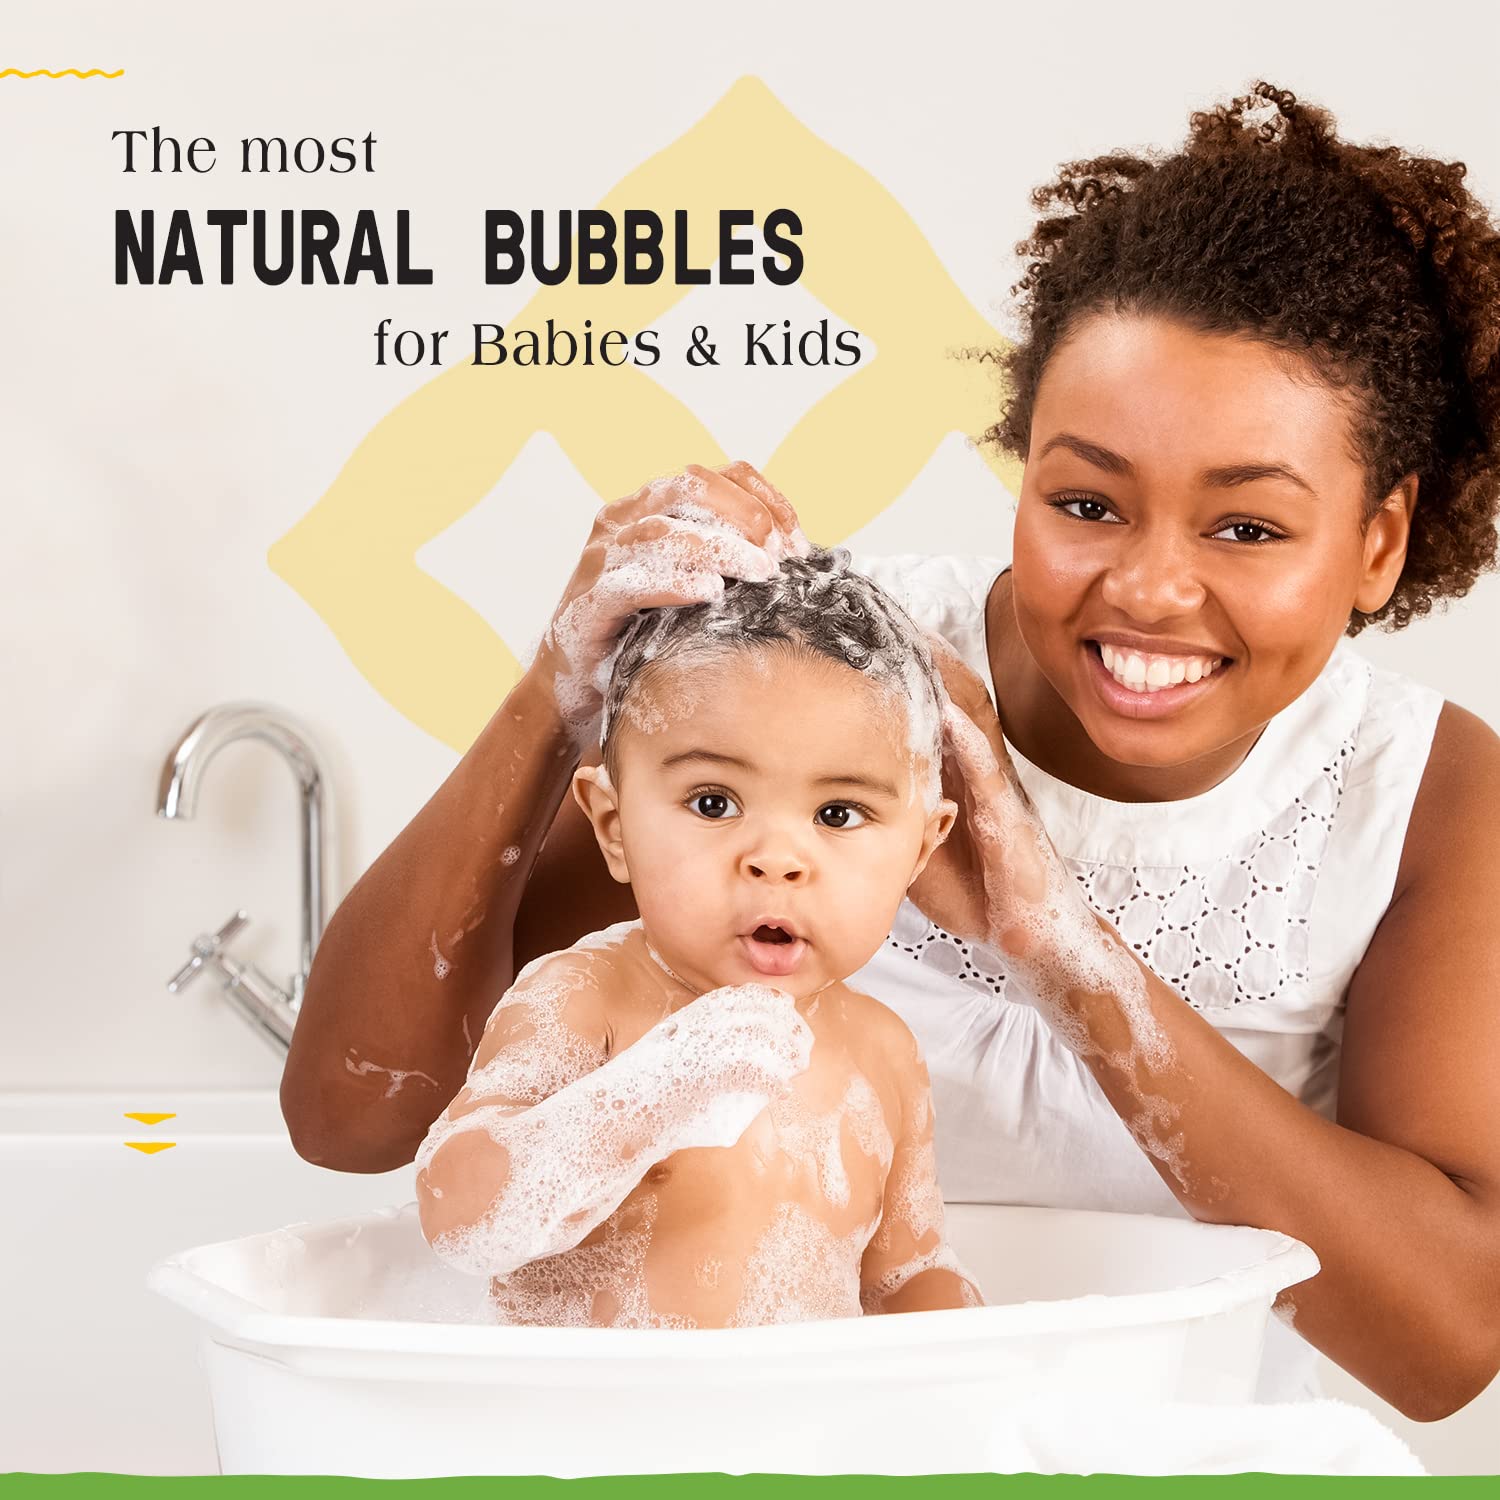 Alaffia Babies and Kids Bubble Bath, Gentle Baby Essentials for Delicate Skin, Cleansing & Calming Bubbles, Plant Based Formula, Vegan, Coconut Chamomile (2 Pack - 32 Fl Oz)